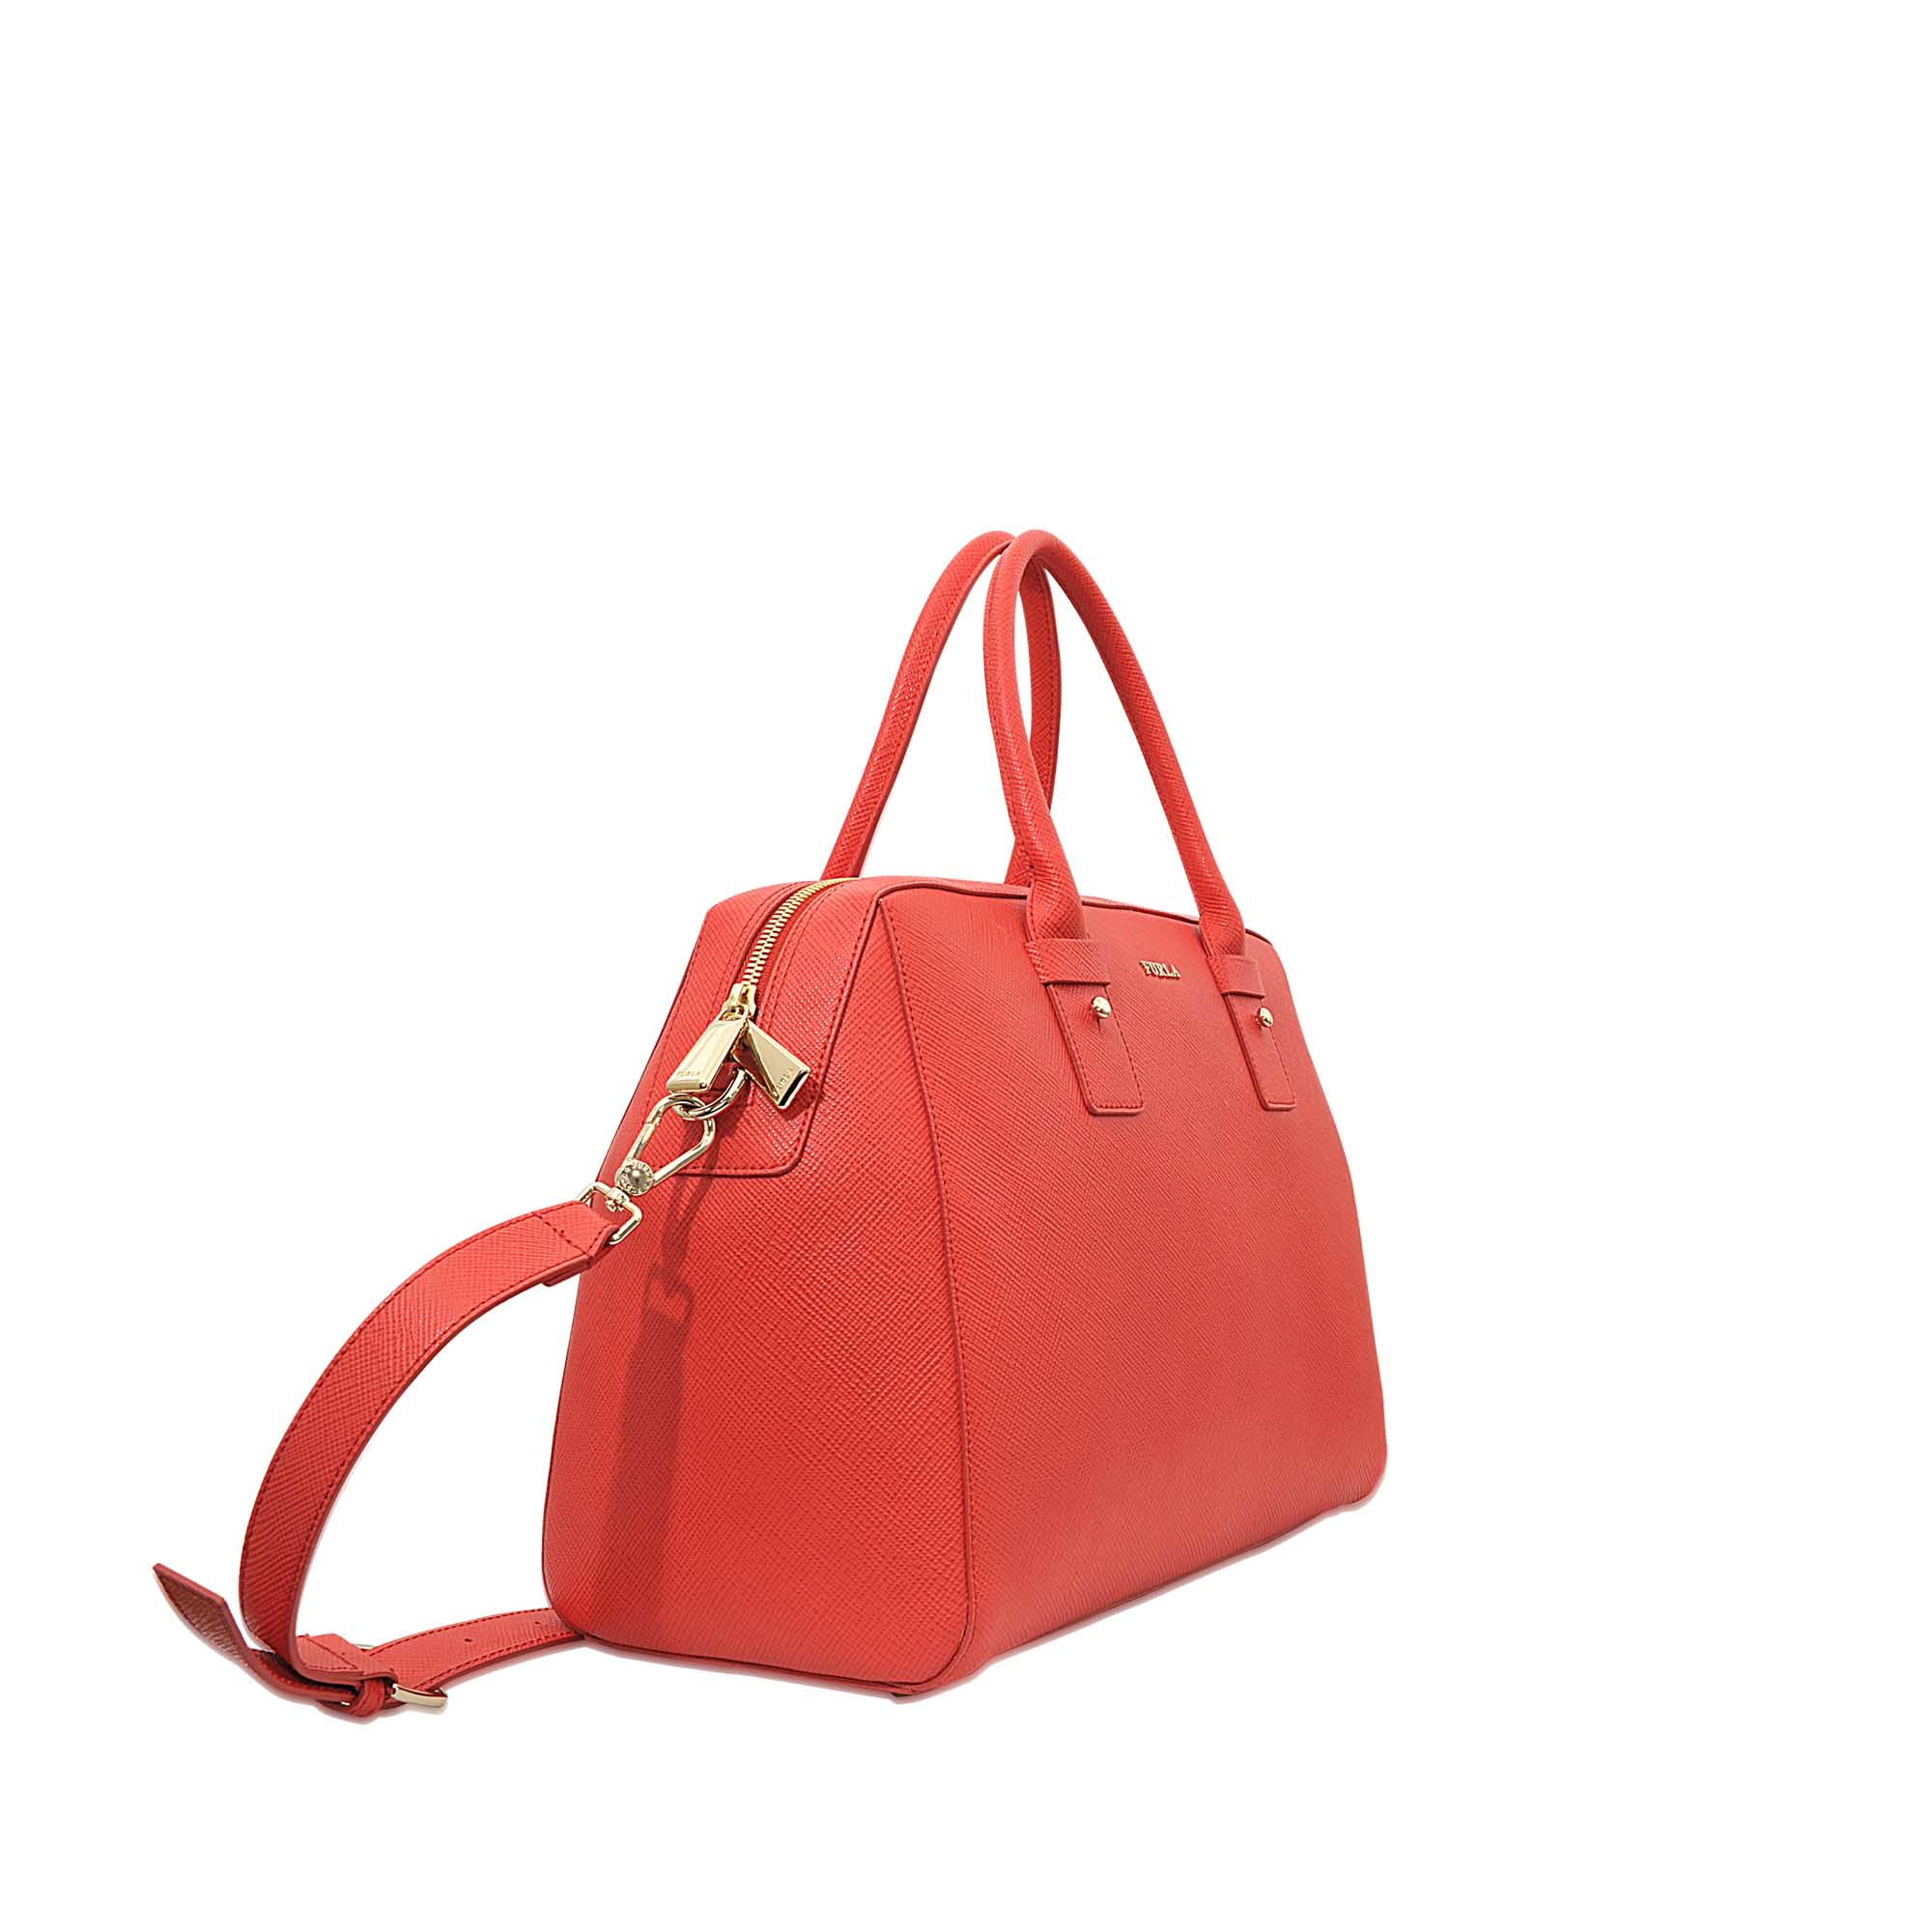 Furla Leather Allegra M Satchel Bag in Red - Lyst